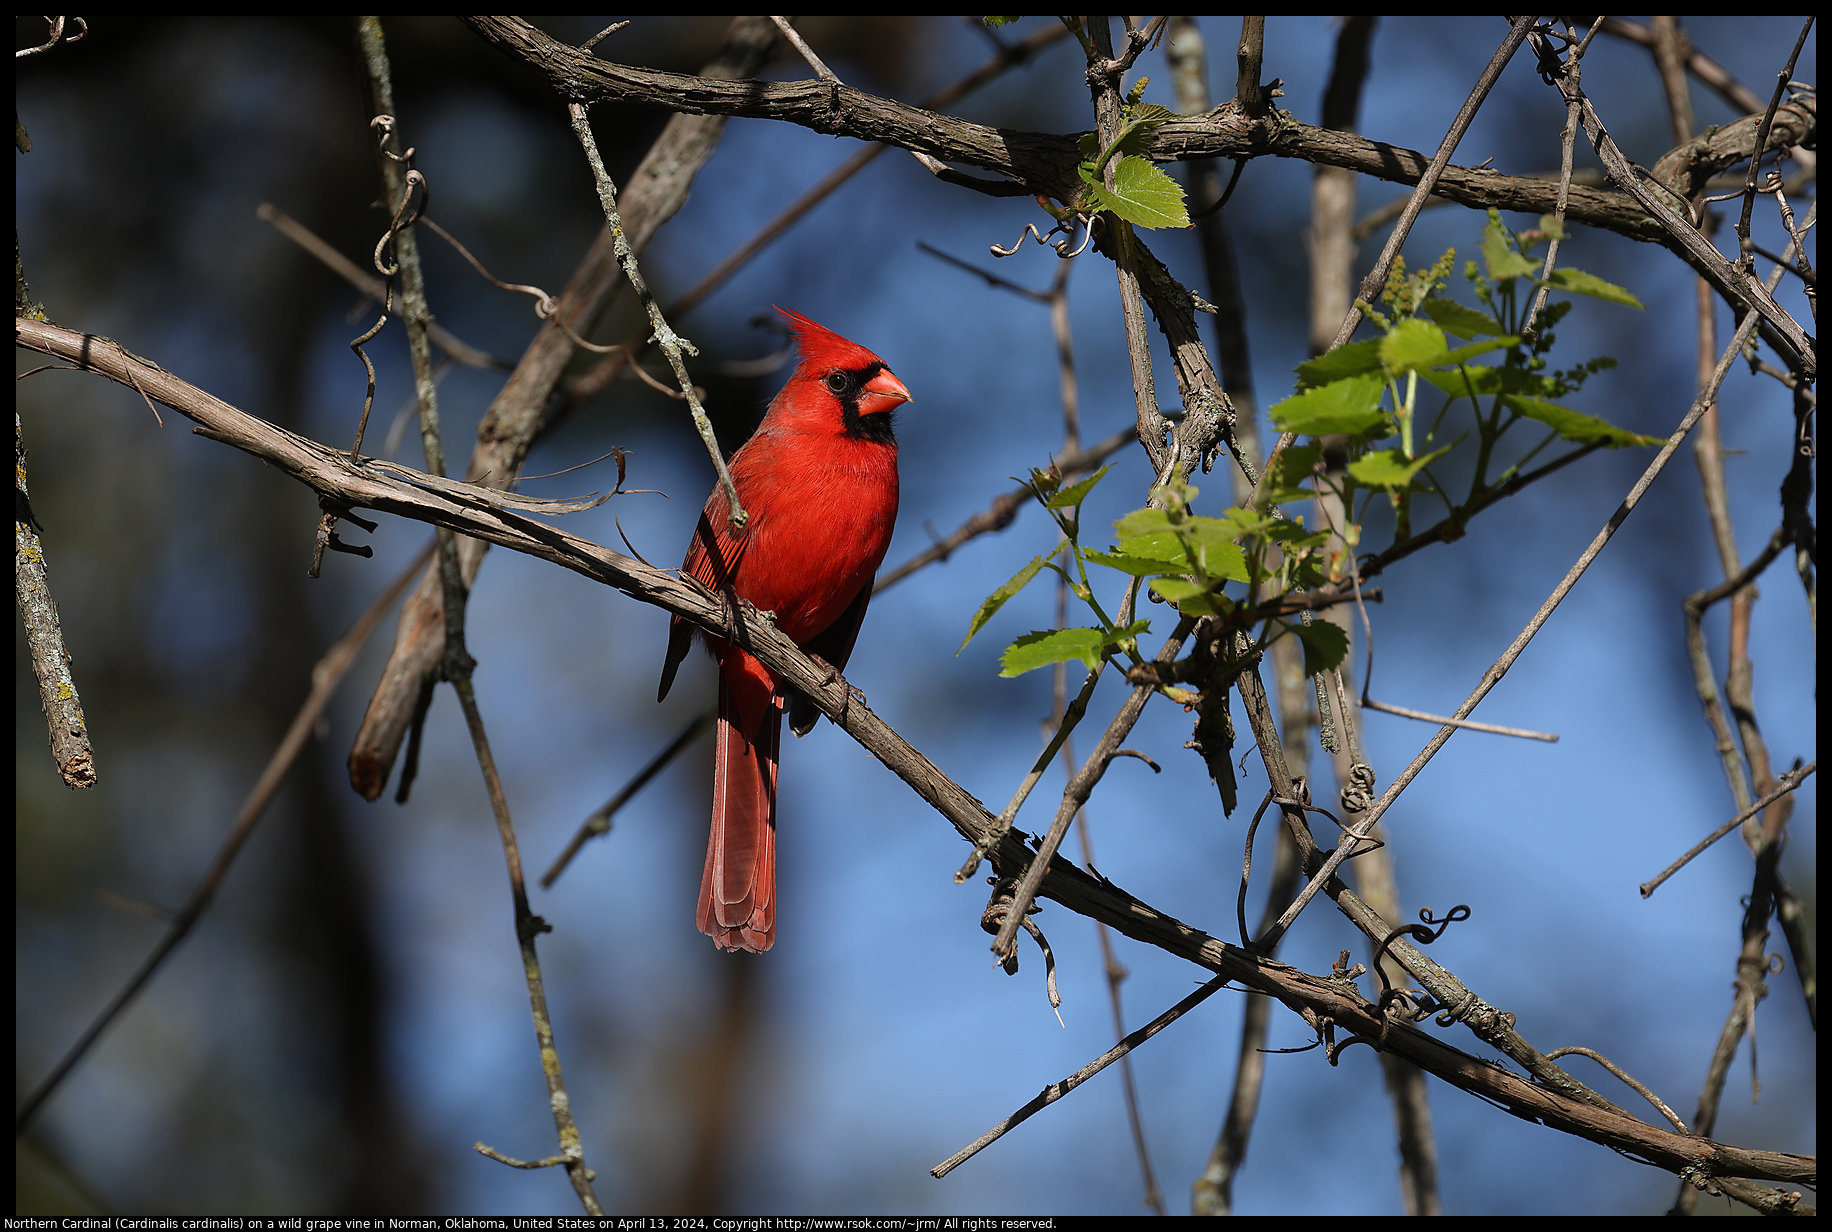 Northern Cardinal (Cardinalis cardinalis) on a wild grape vine in Norman, Oklahoma, United States on April 13, 2024